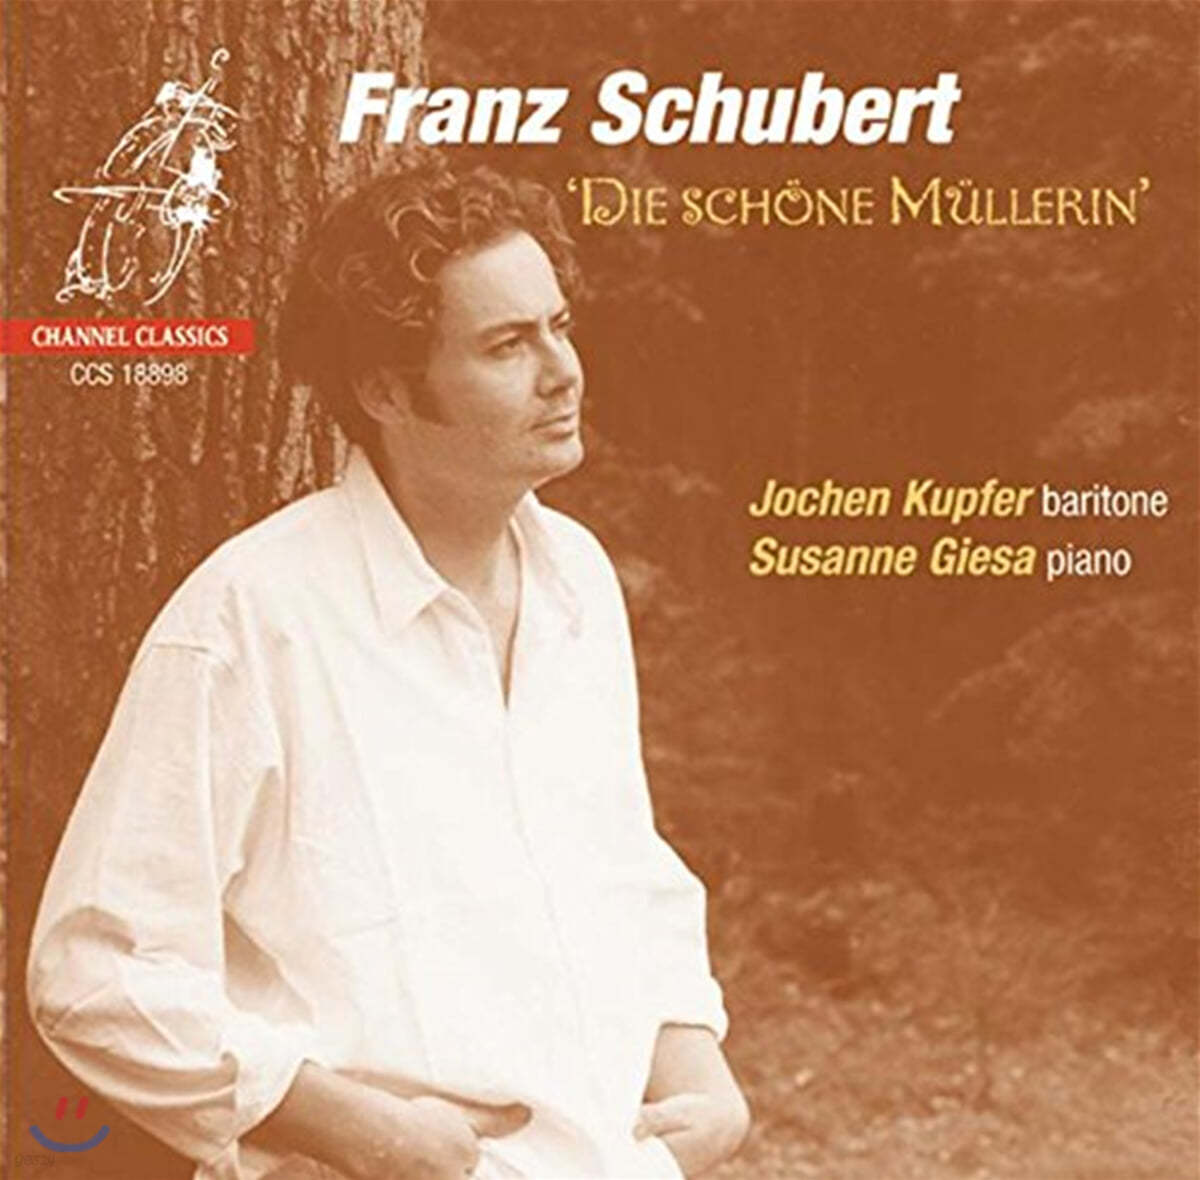 Jochen Kupfer 슈베르트: 아름다운 물레방앗간집 딸 (Schubert: Die Schone Mullerin) 